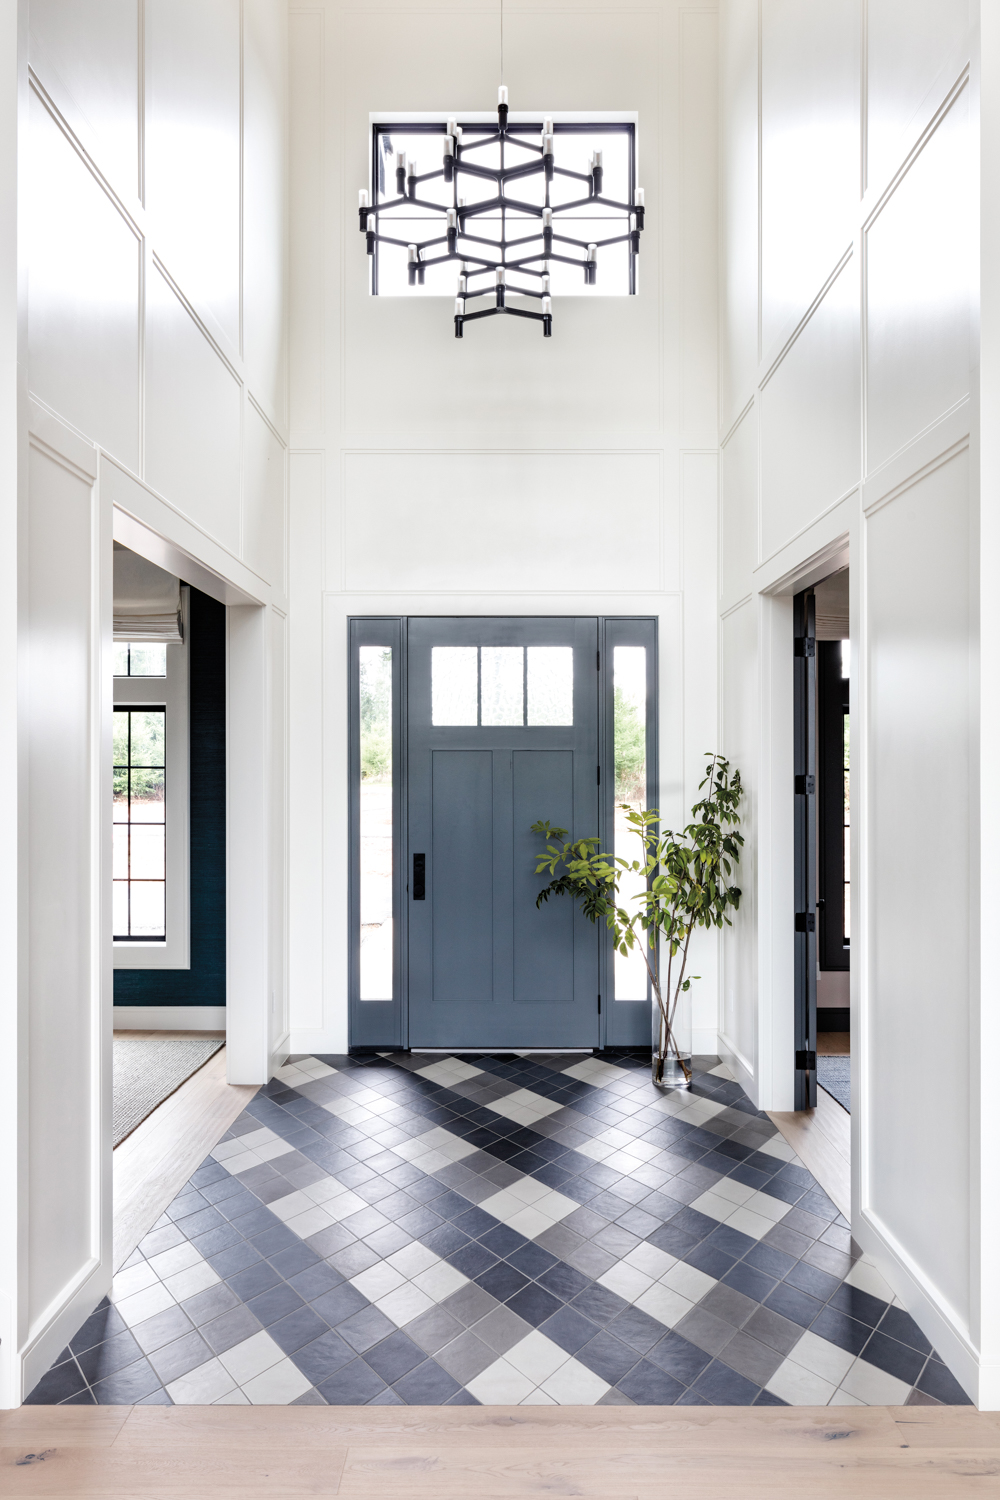 entryway with tartan pattern tiles and Nemo lighting fixture